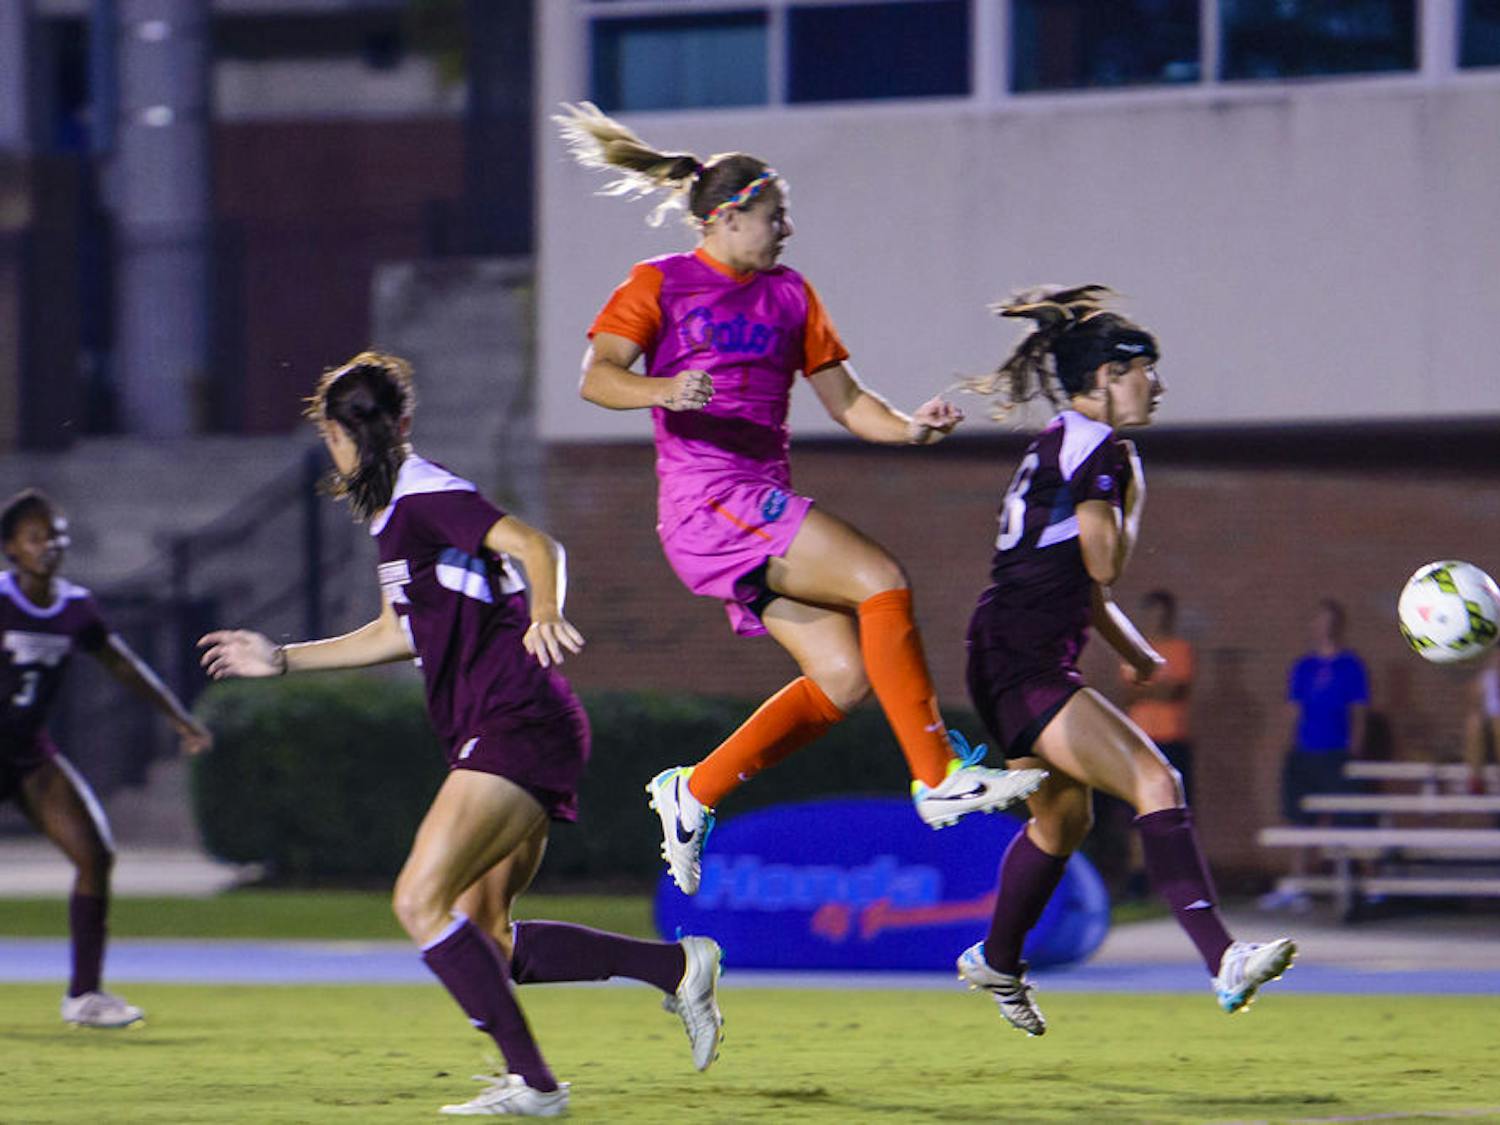 Savannah Jordan kicks the ball during Florida's 5-1 win against Mississippi State on Oct. 10.